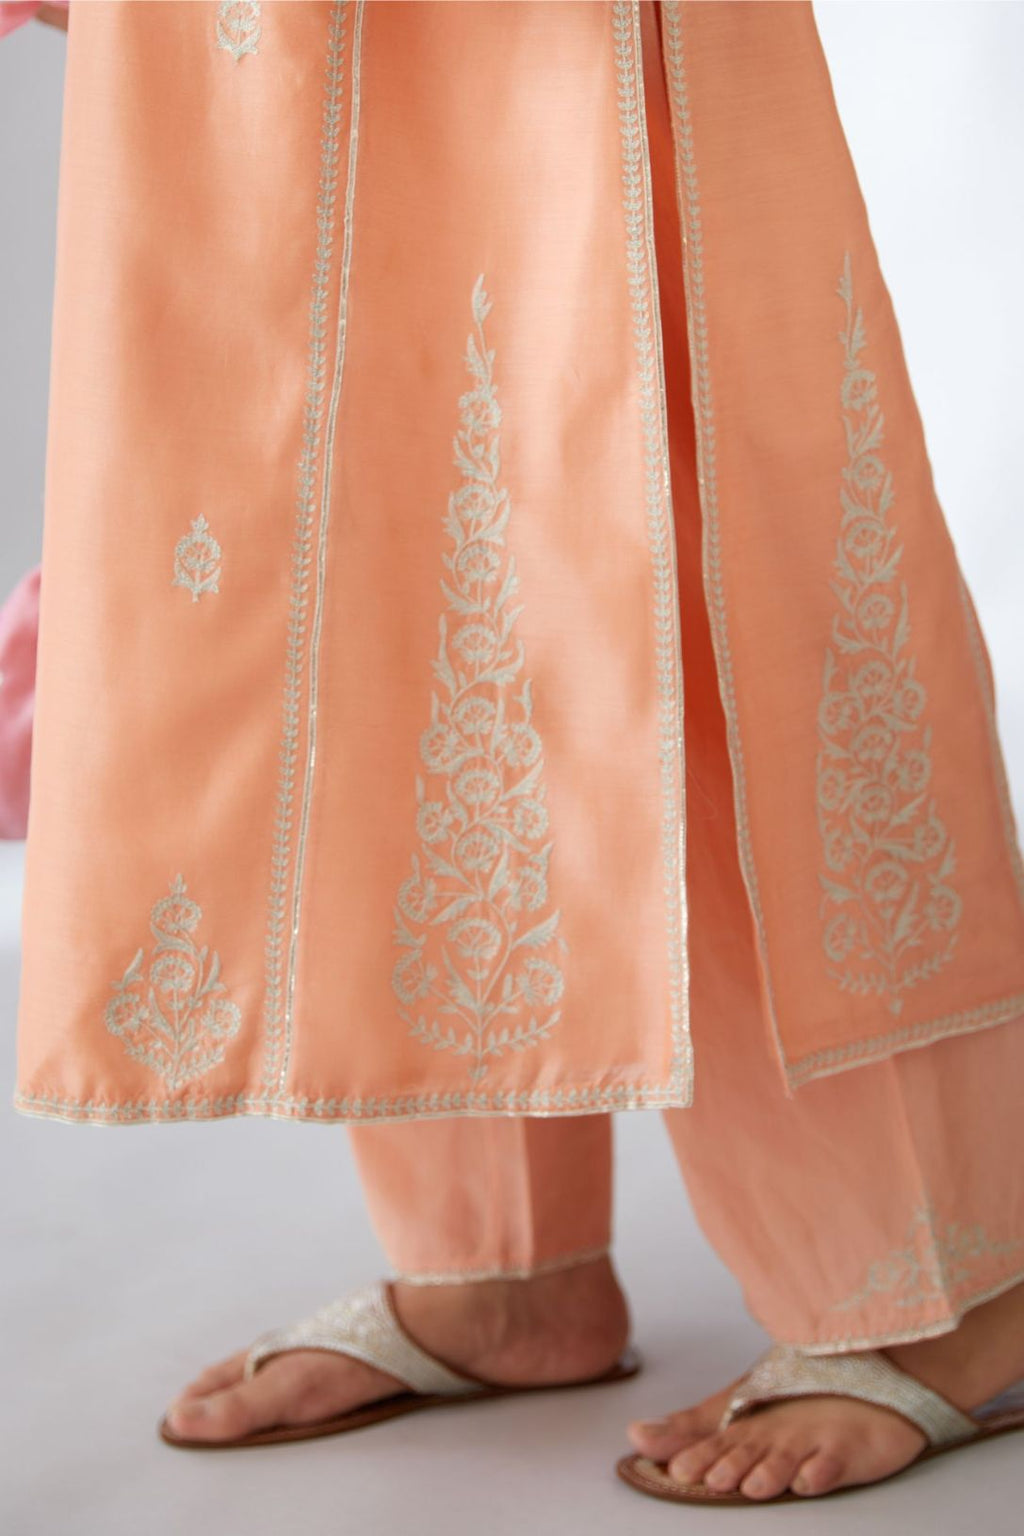 Peach silk chanderi kurta set with all-over silver zari & gota embroidery.